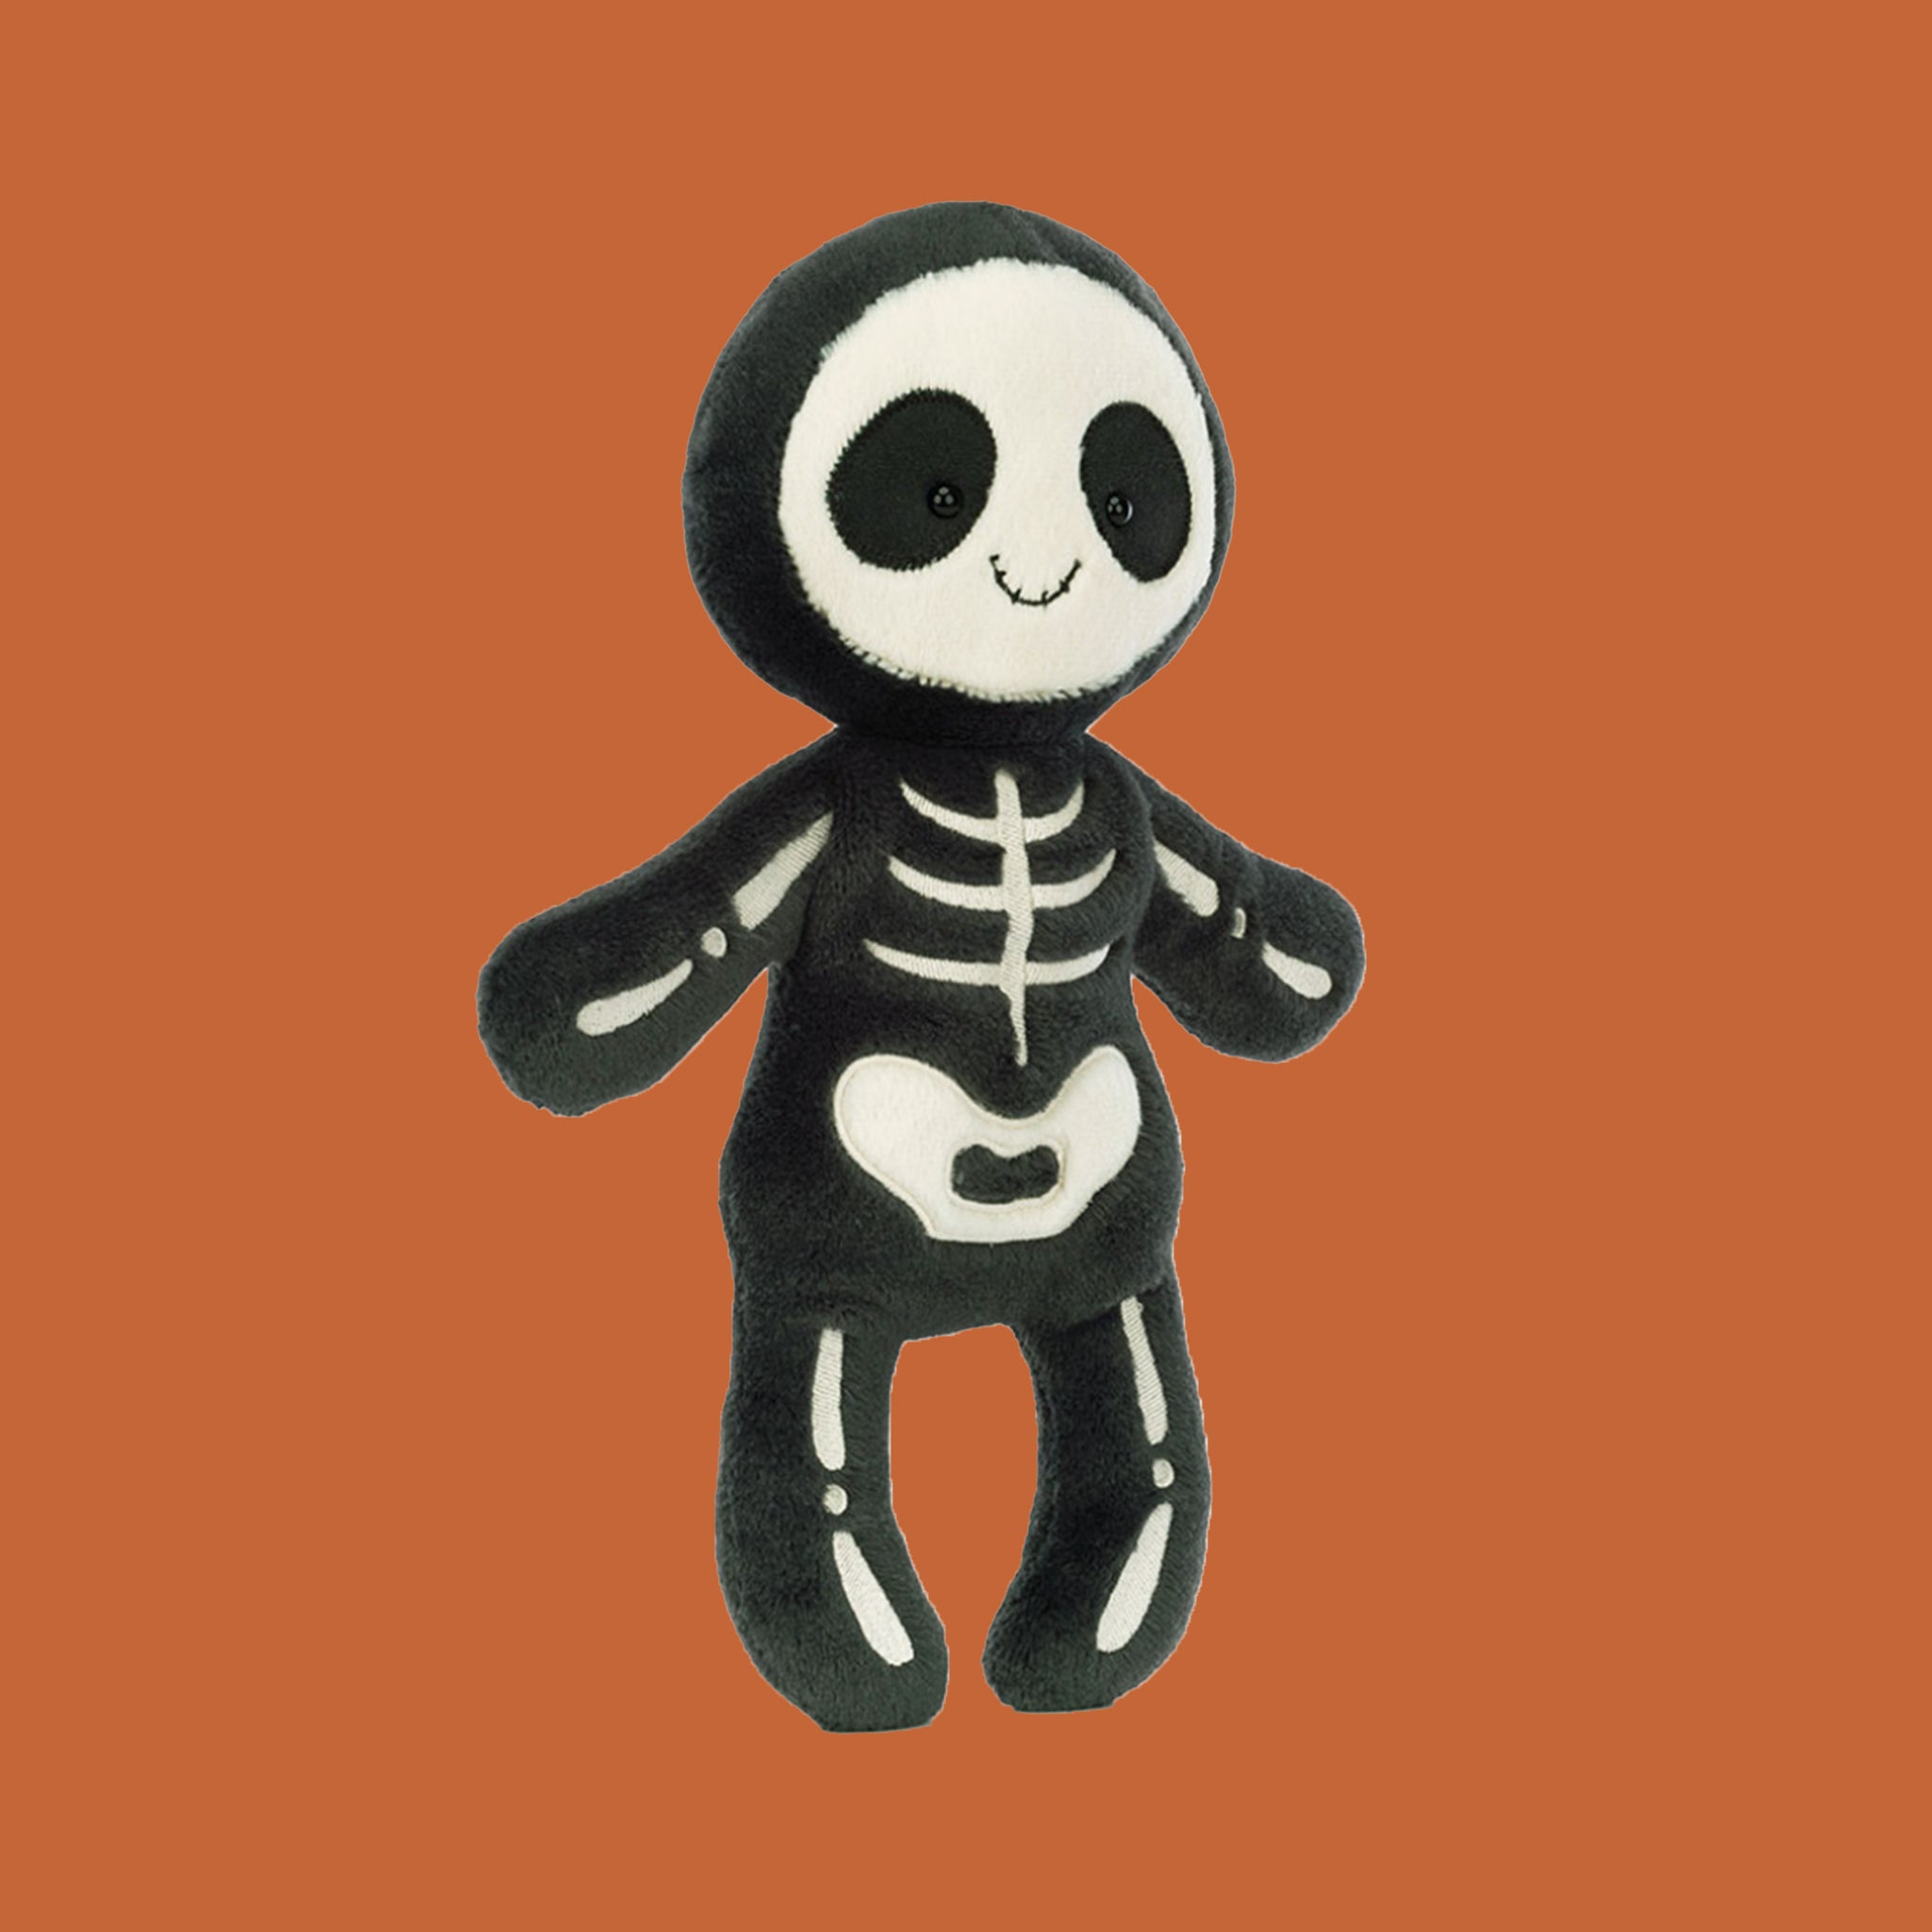 A black and white skeleton stuffed toy. 